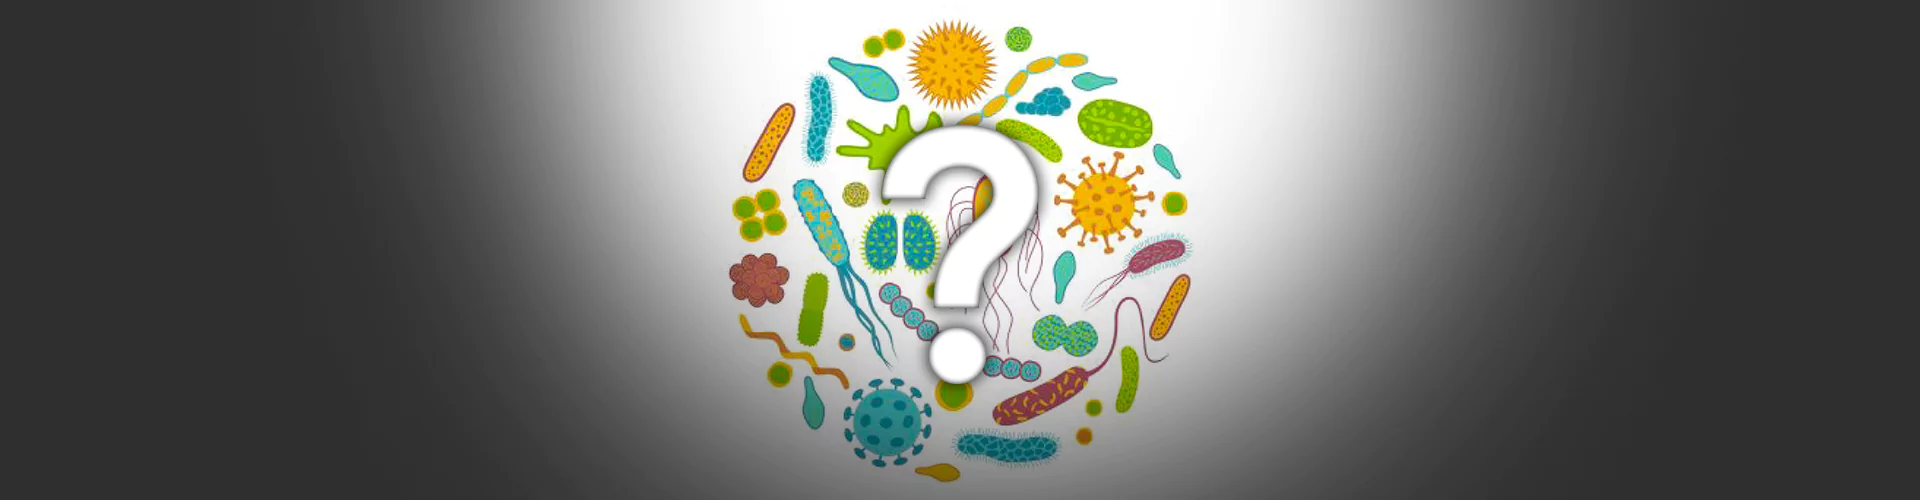 ARTICOLOBLOG_Microbiota cos'è e perché è importante